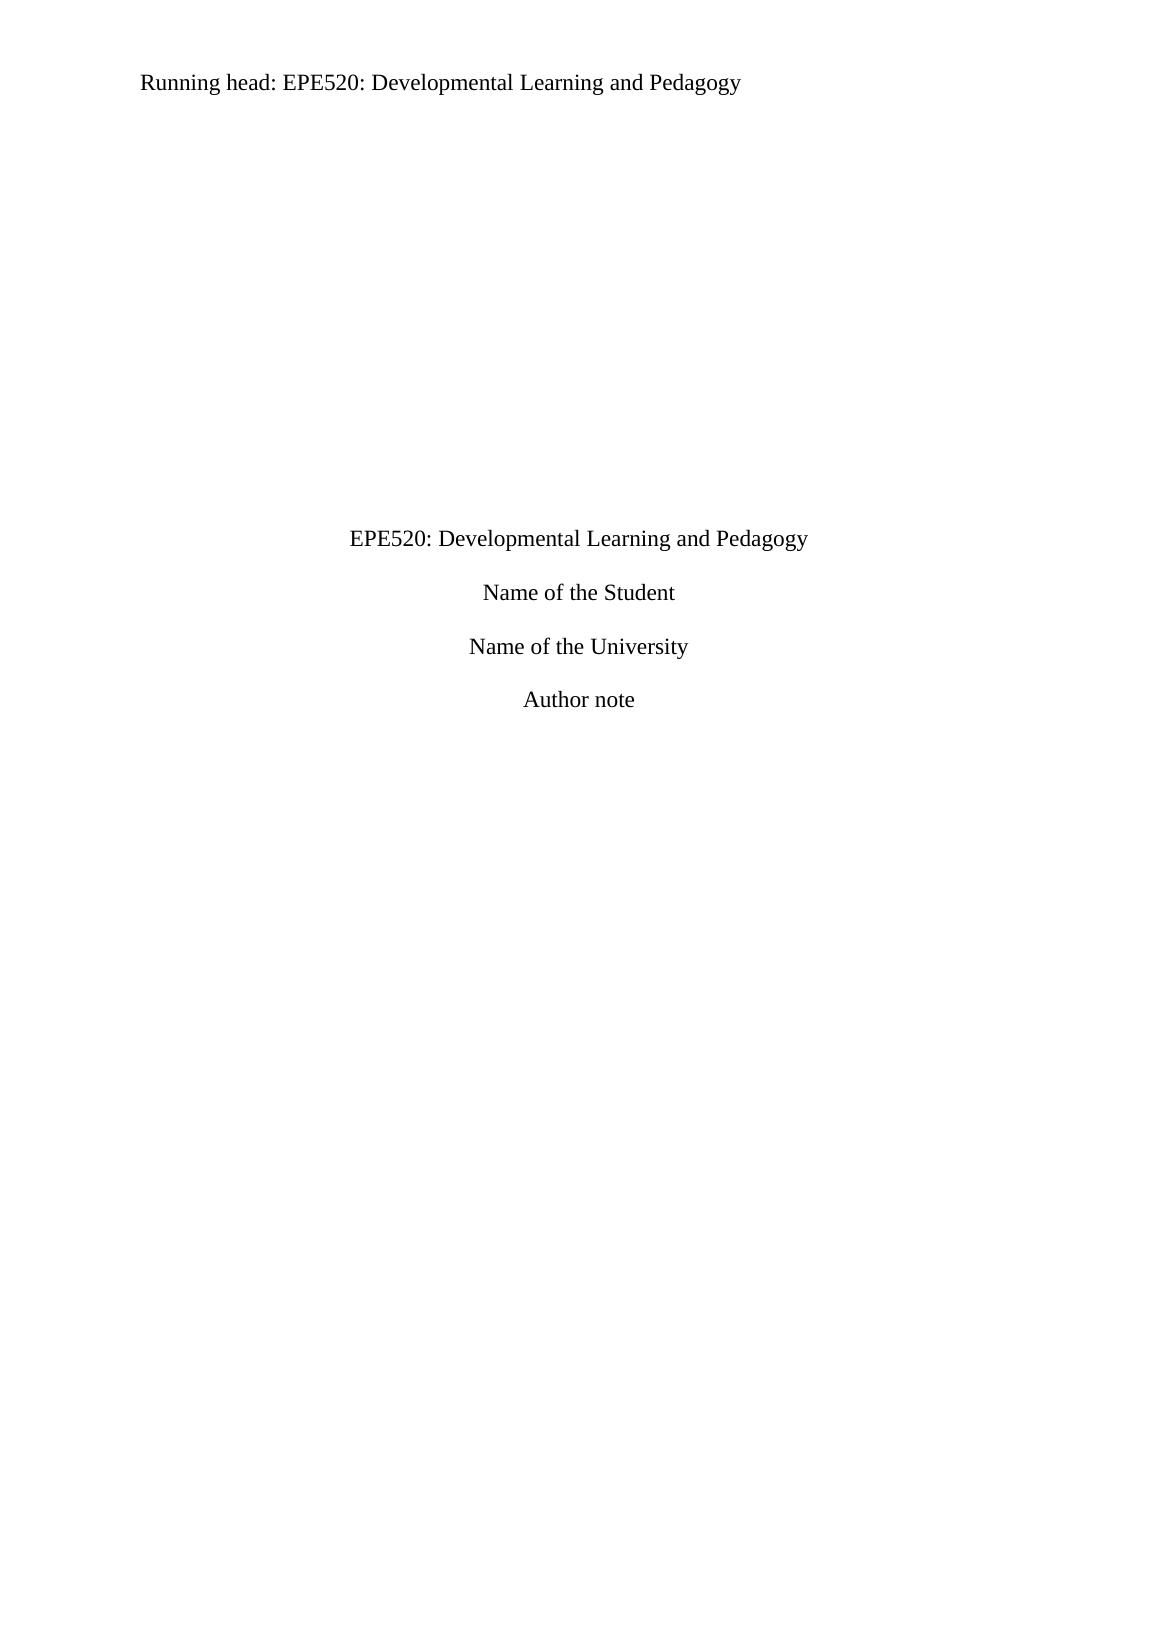 EPE520: Developmental Learning and Pedagogy Assessment 2022_1